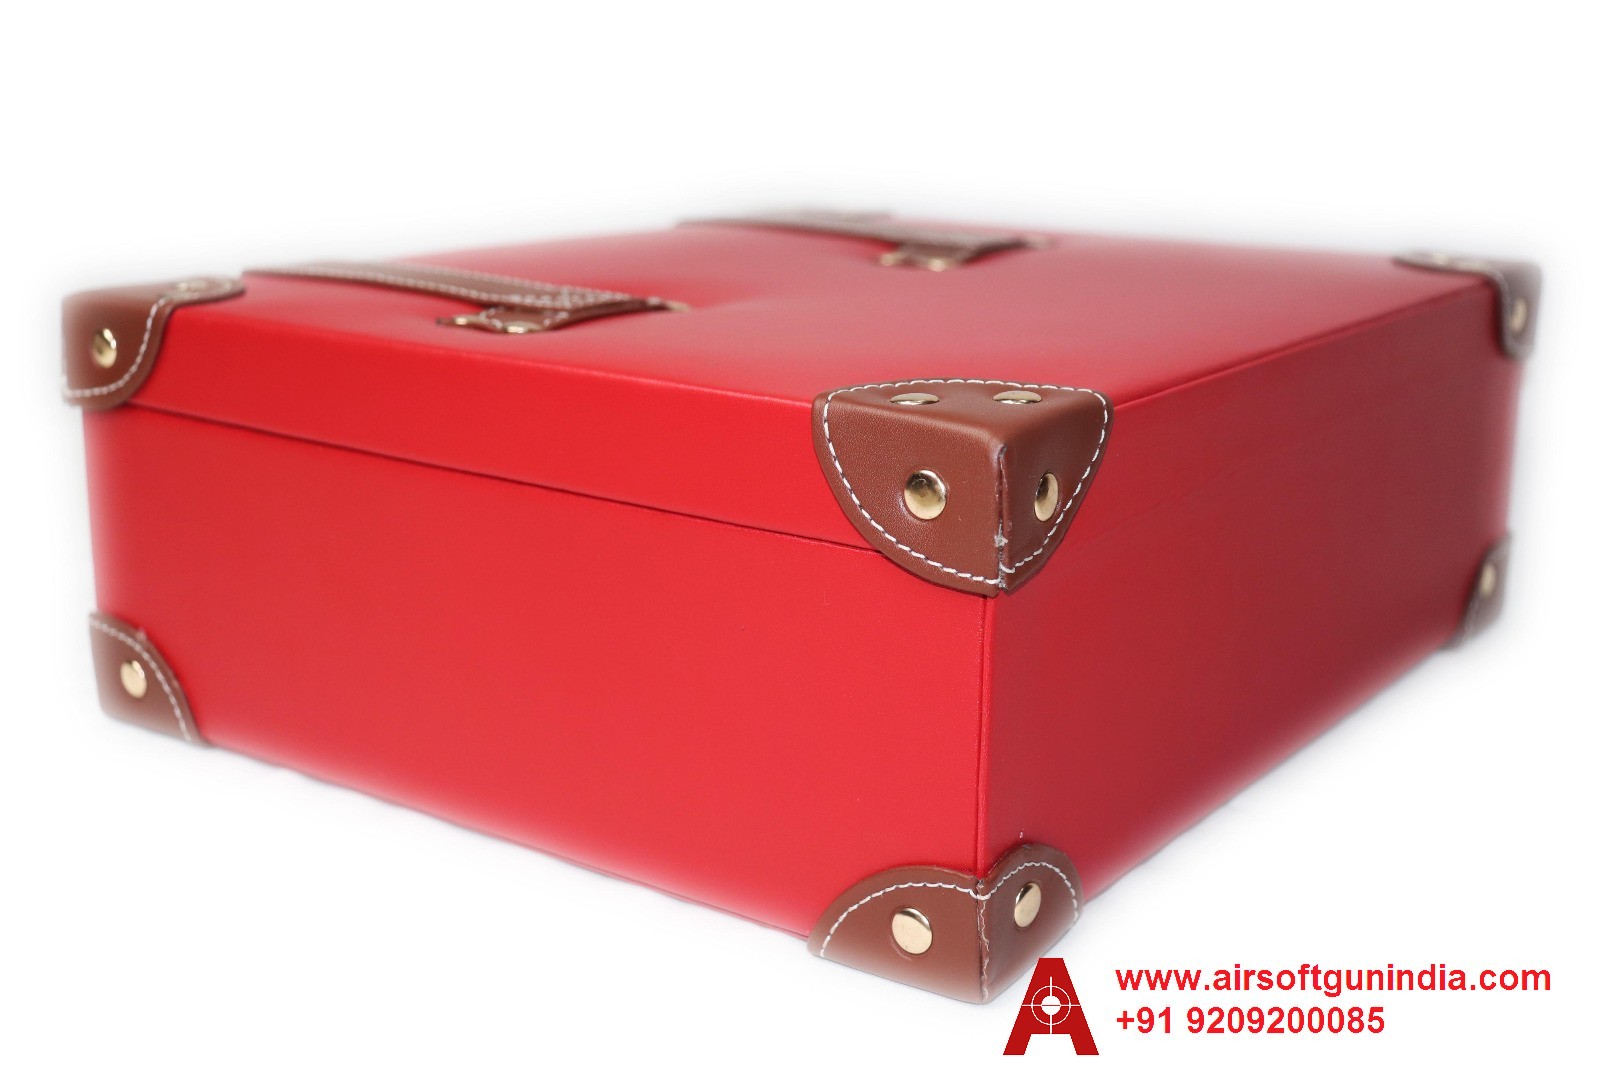 Vintage Retro Luxury Suitcase/Gun Box In Red Shade By Airsoft Gun India